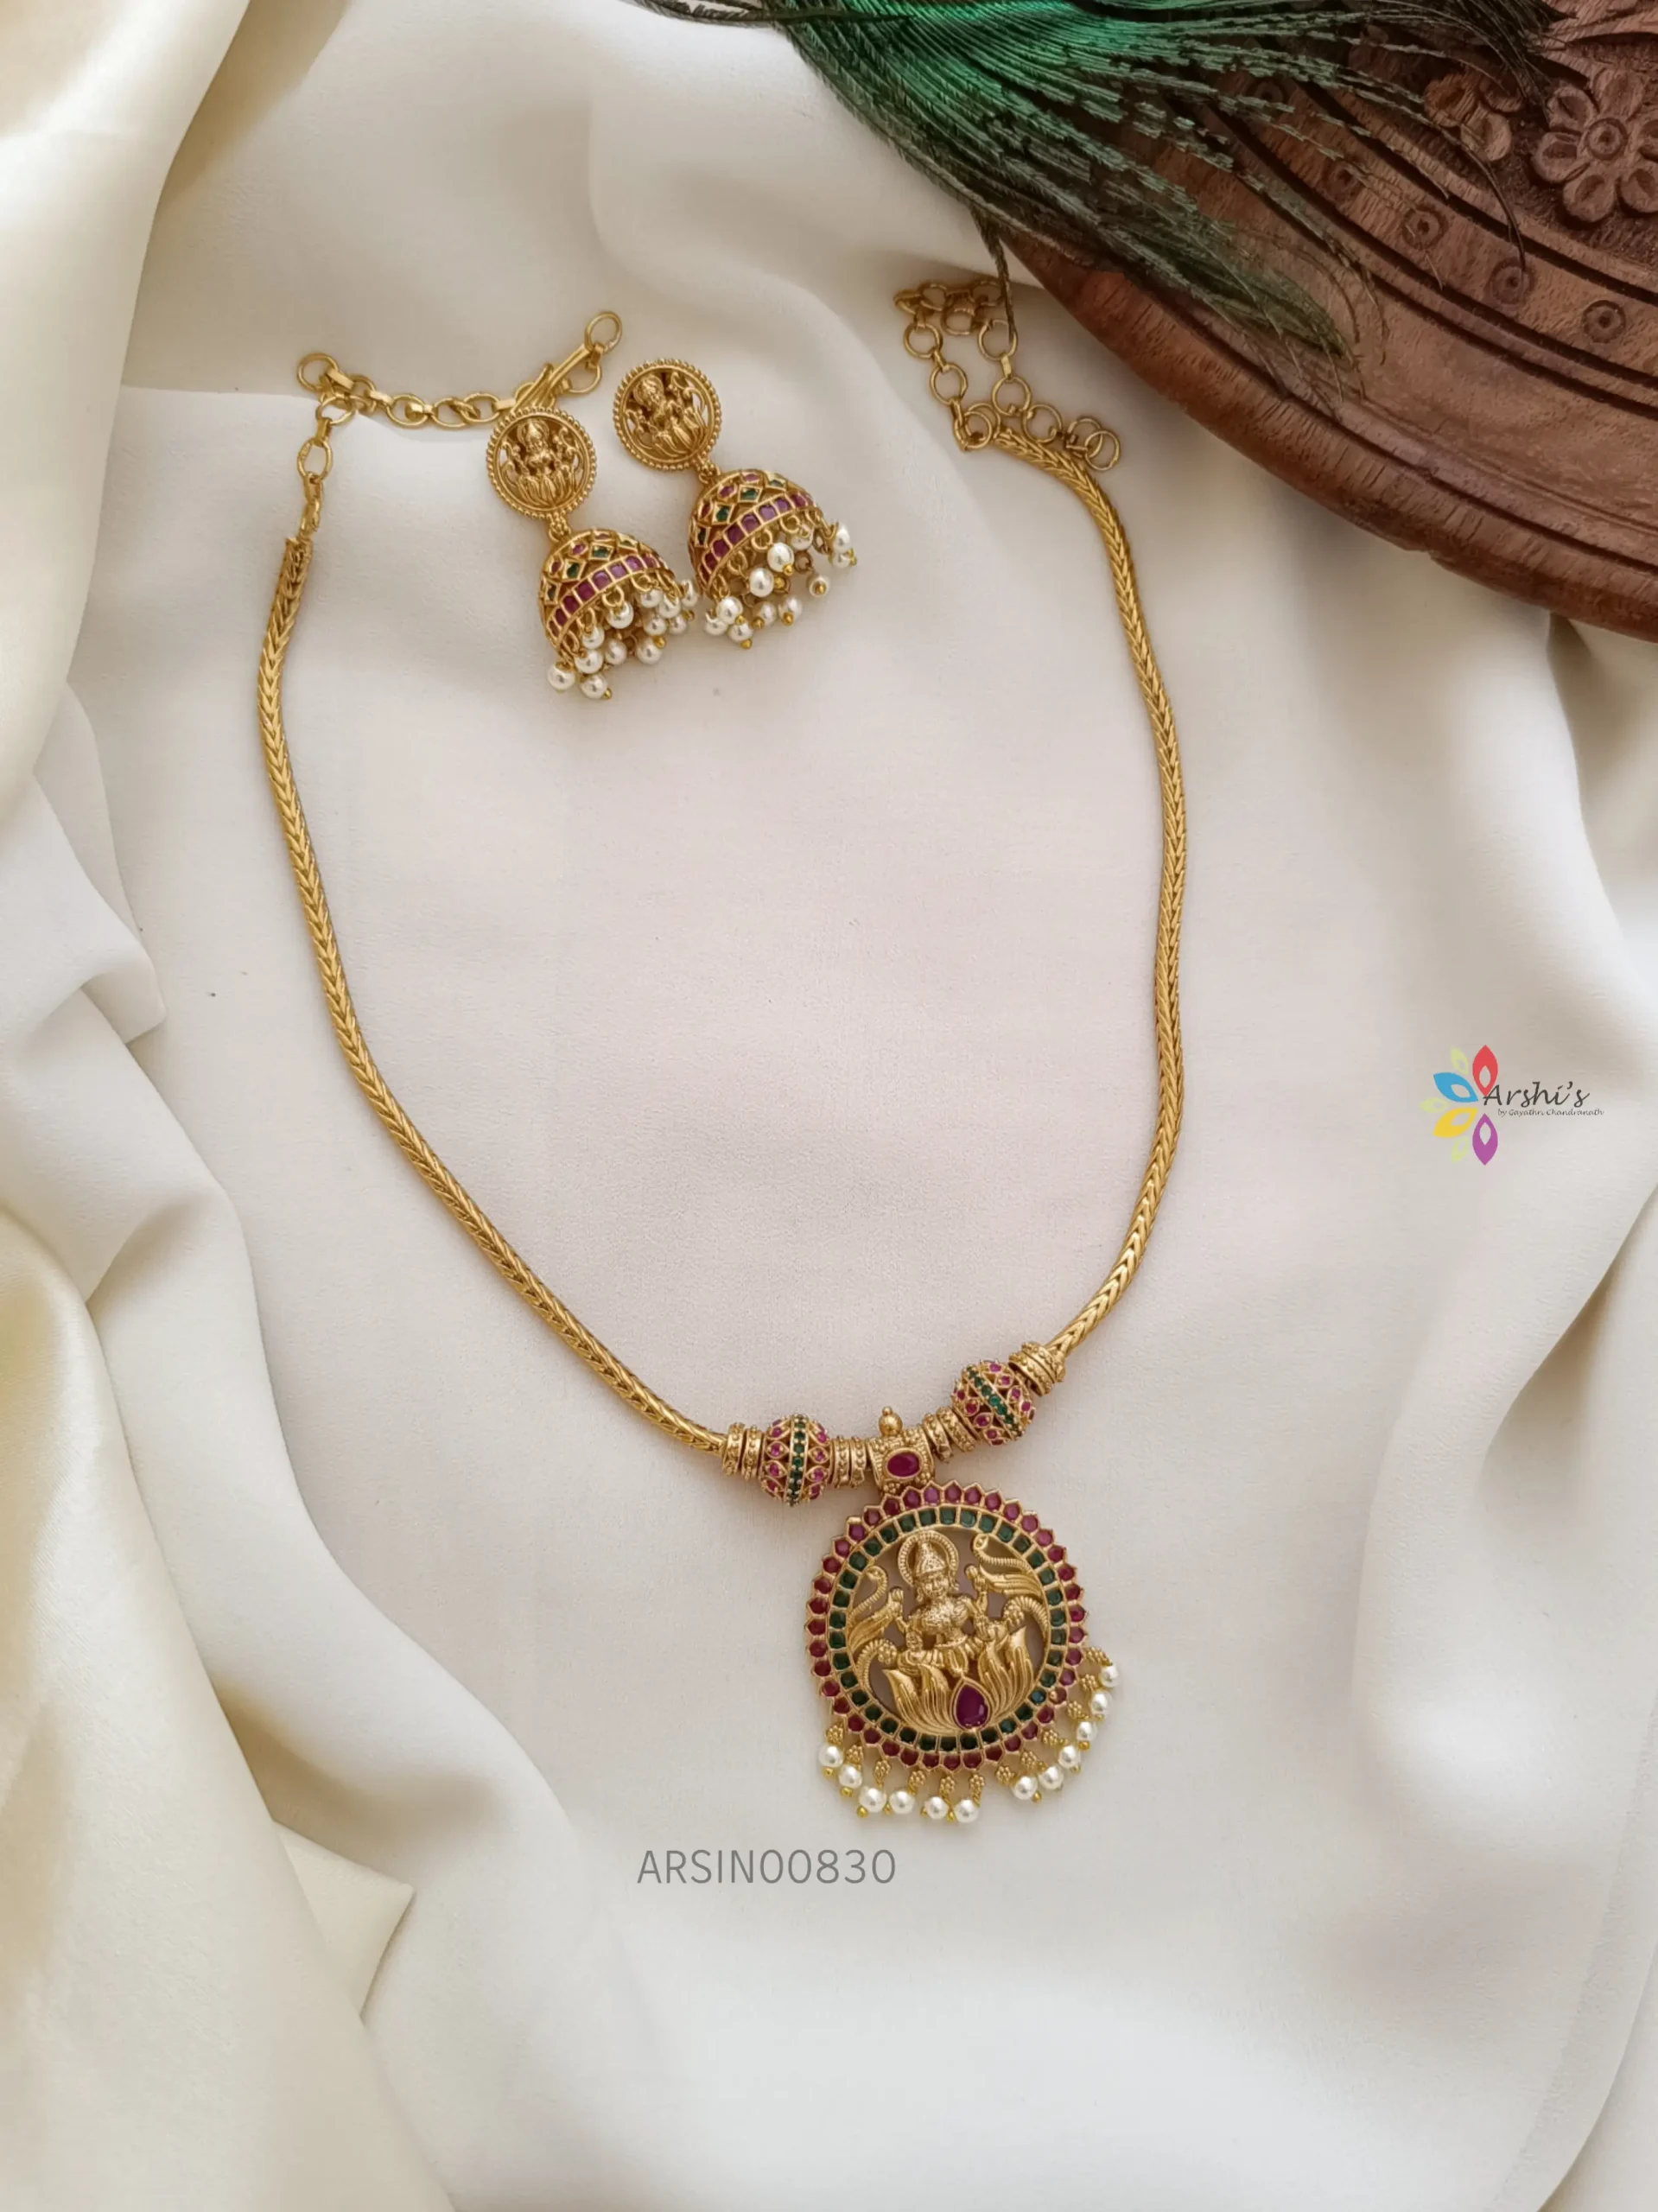 Simple Chain Lakshmi Pendant with Pearl Necklace